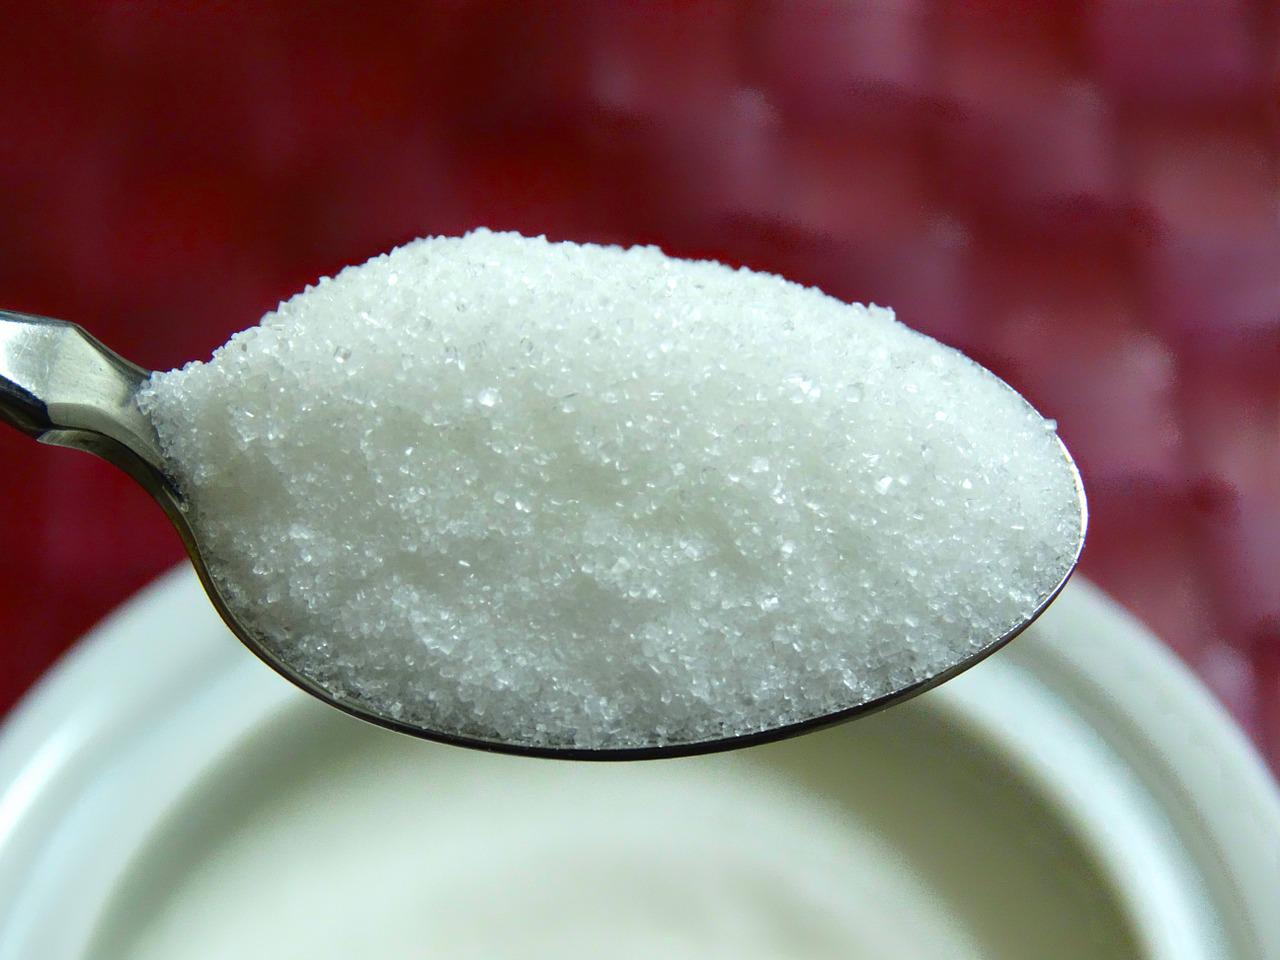 Sugars in Body: చక్కెర ఎక్కువగా తీసుకుంటే ఈ ప్రాబ్లమ్స్ వస్తాయి